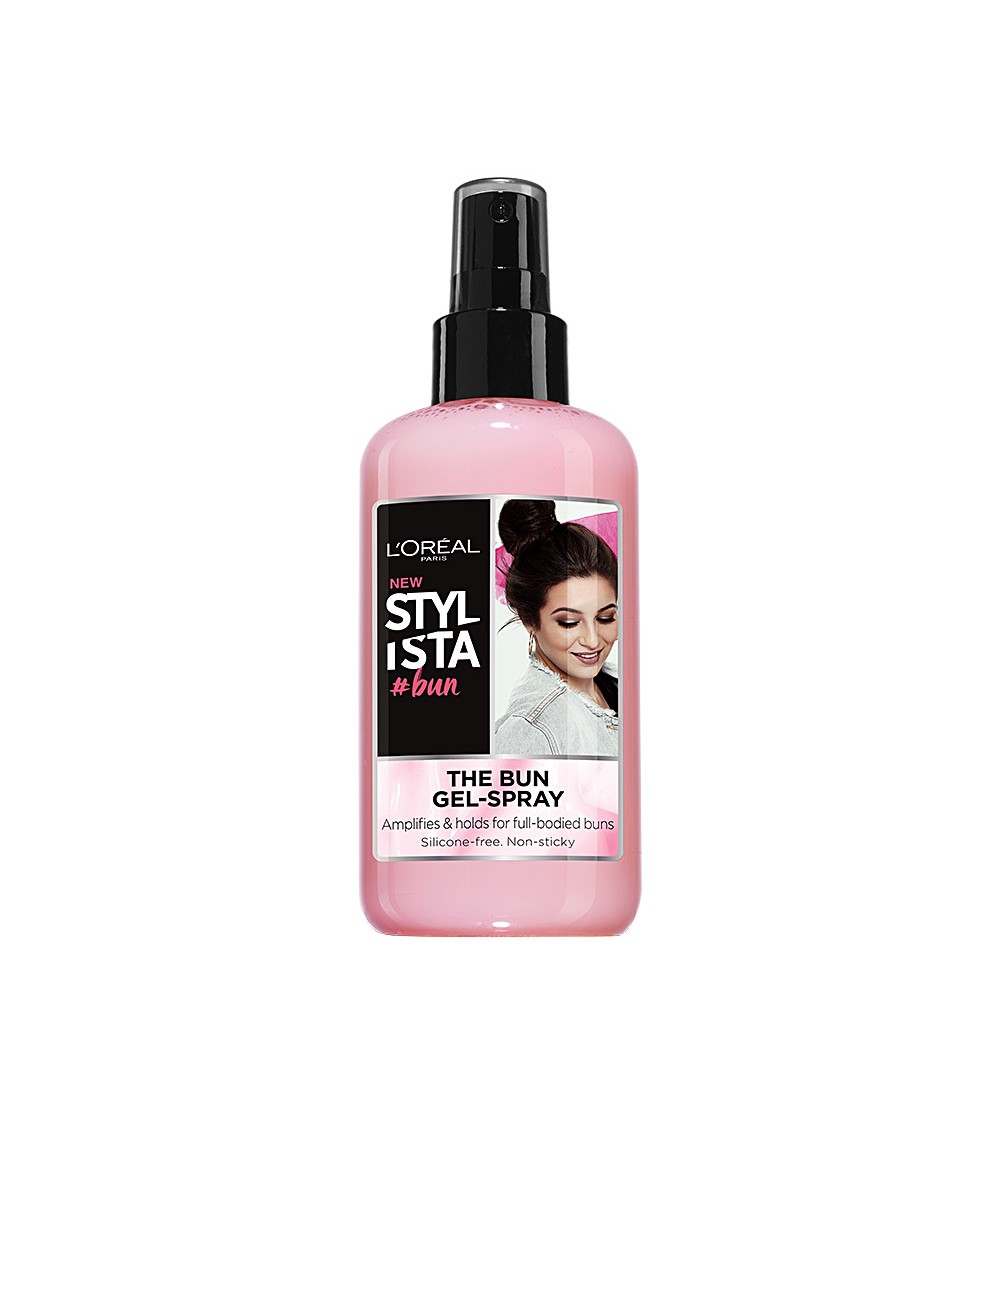 STYLISTA BUN gel-spray amplifies&holds buns 200 ml